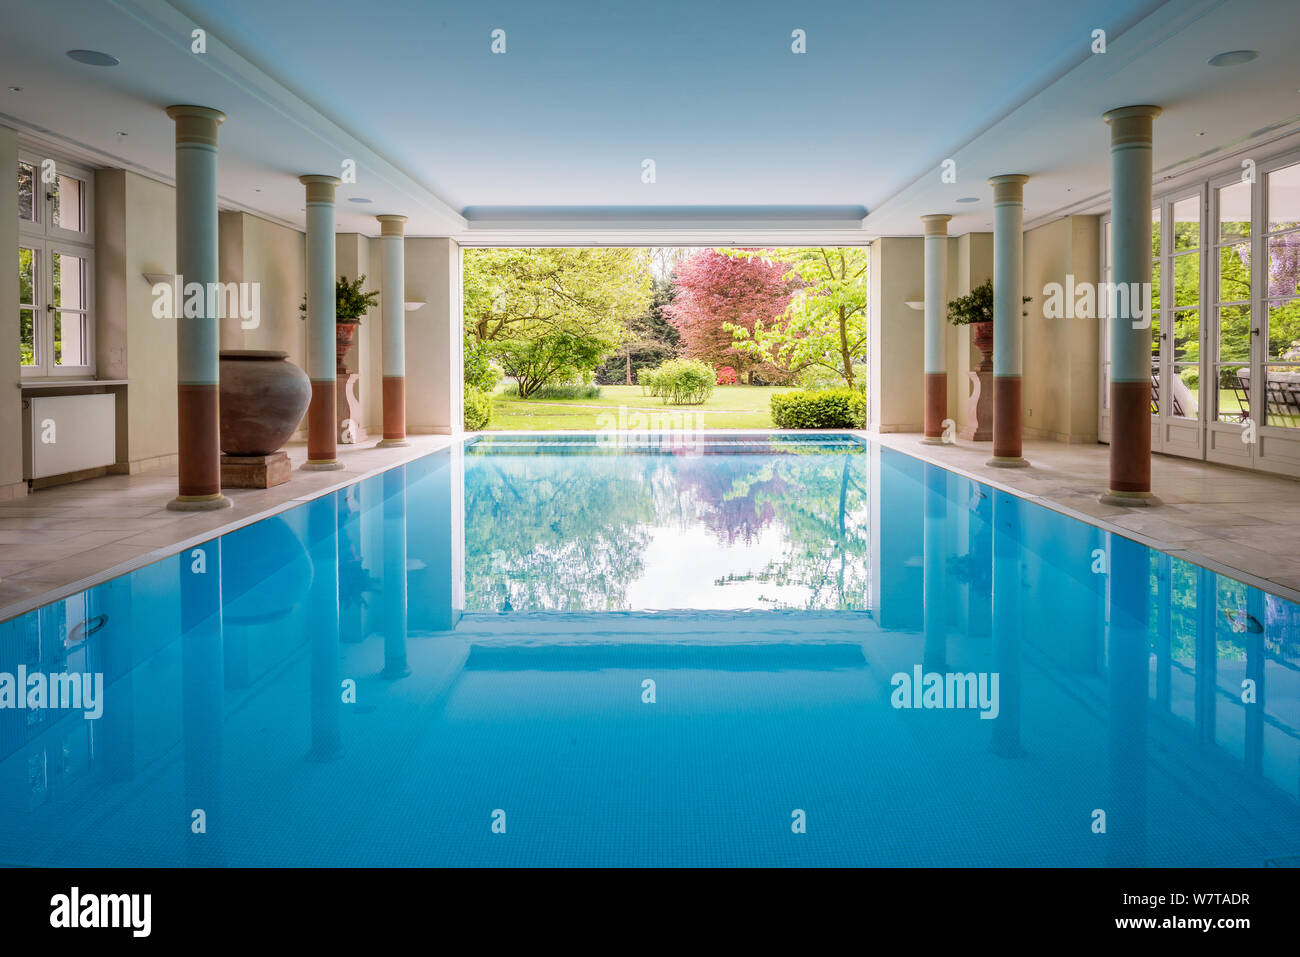 Classic style indoor swimming pool Stock Photo